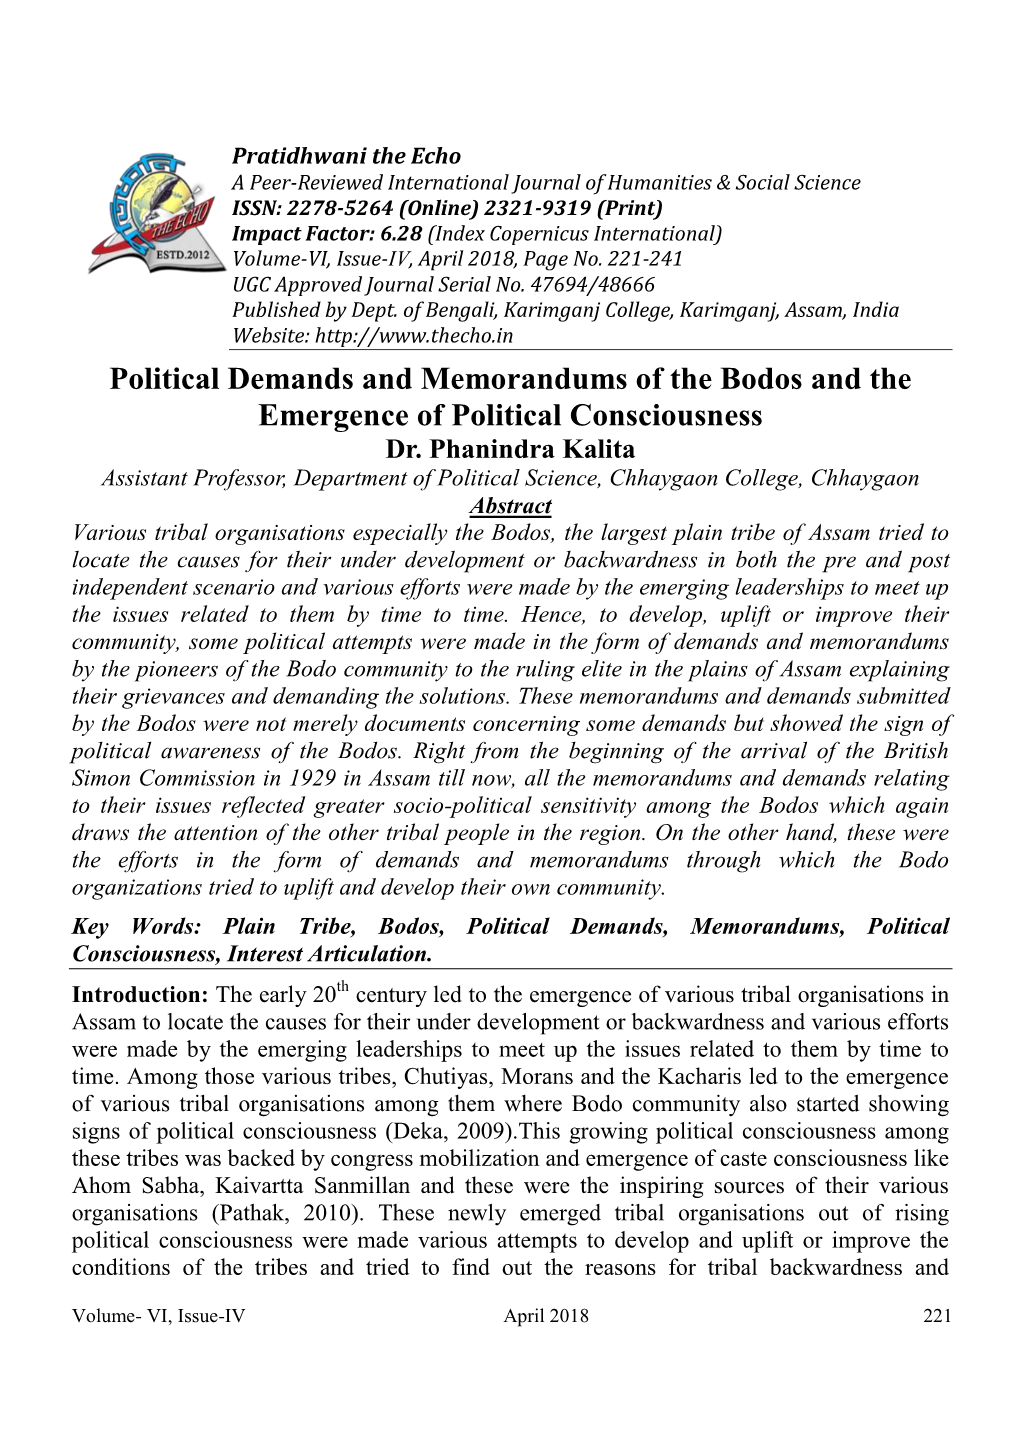 Political Demands and Memorandums of the Bodos and the Emergence of Political Consciousness Dr